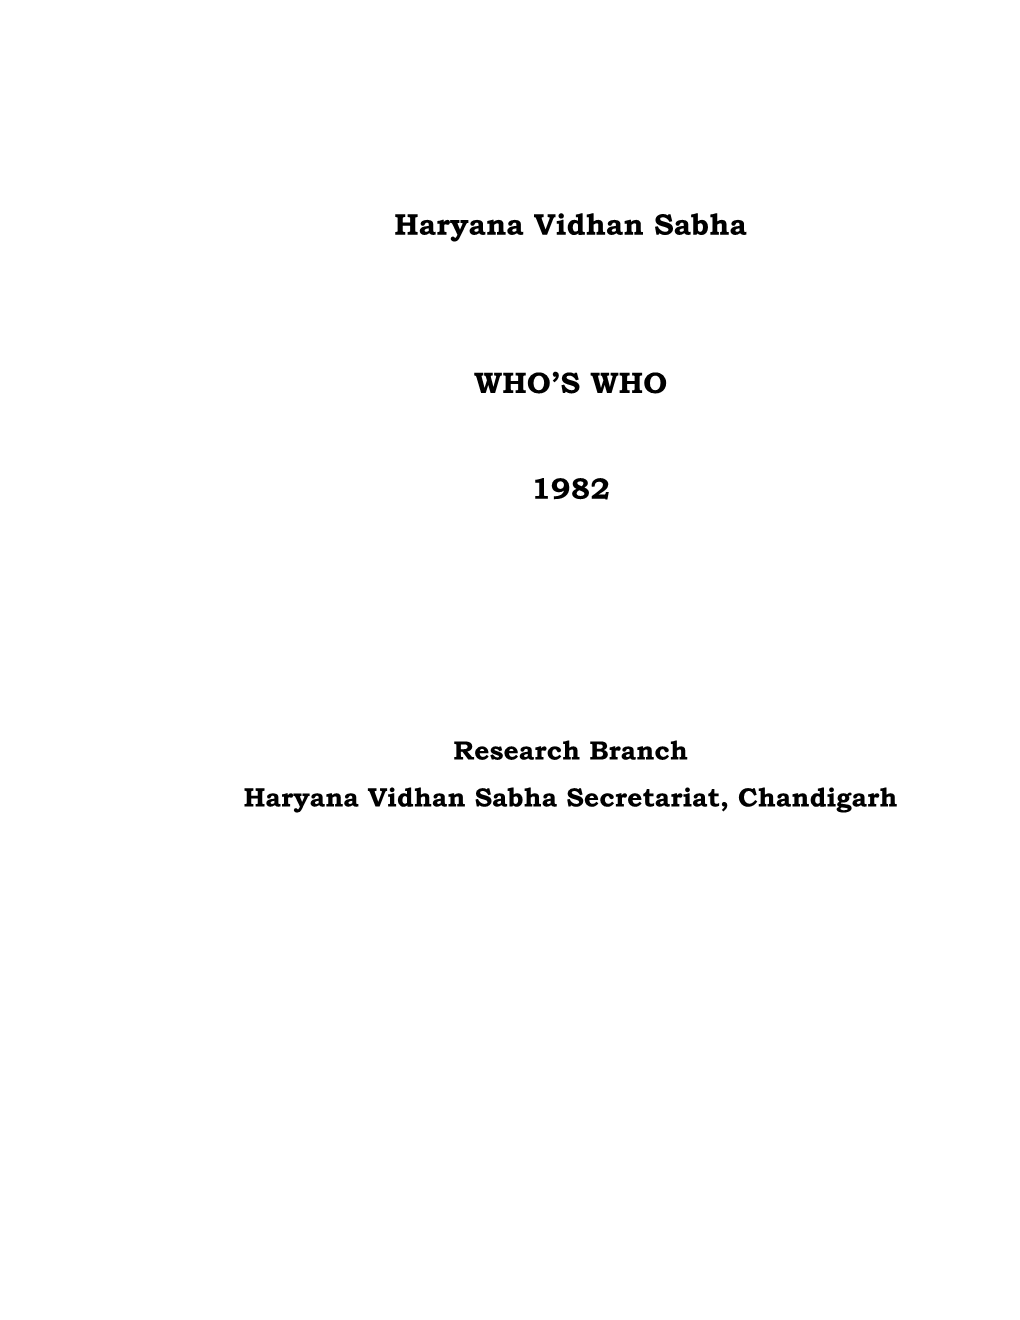 Haryana Vidhan Sabha WHO's WHO 1982